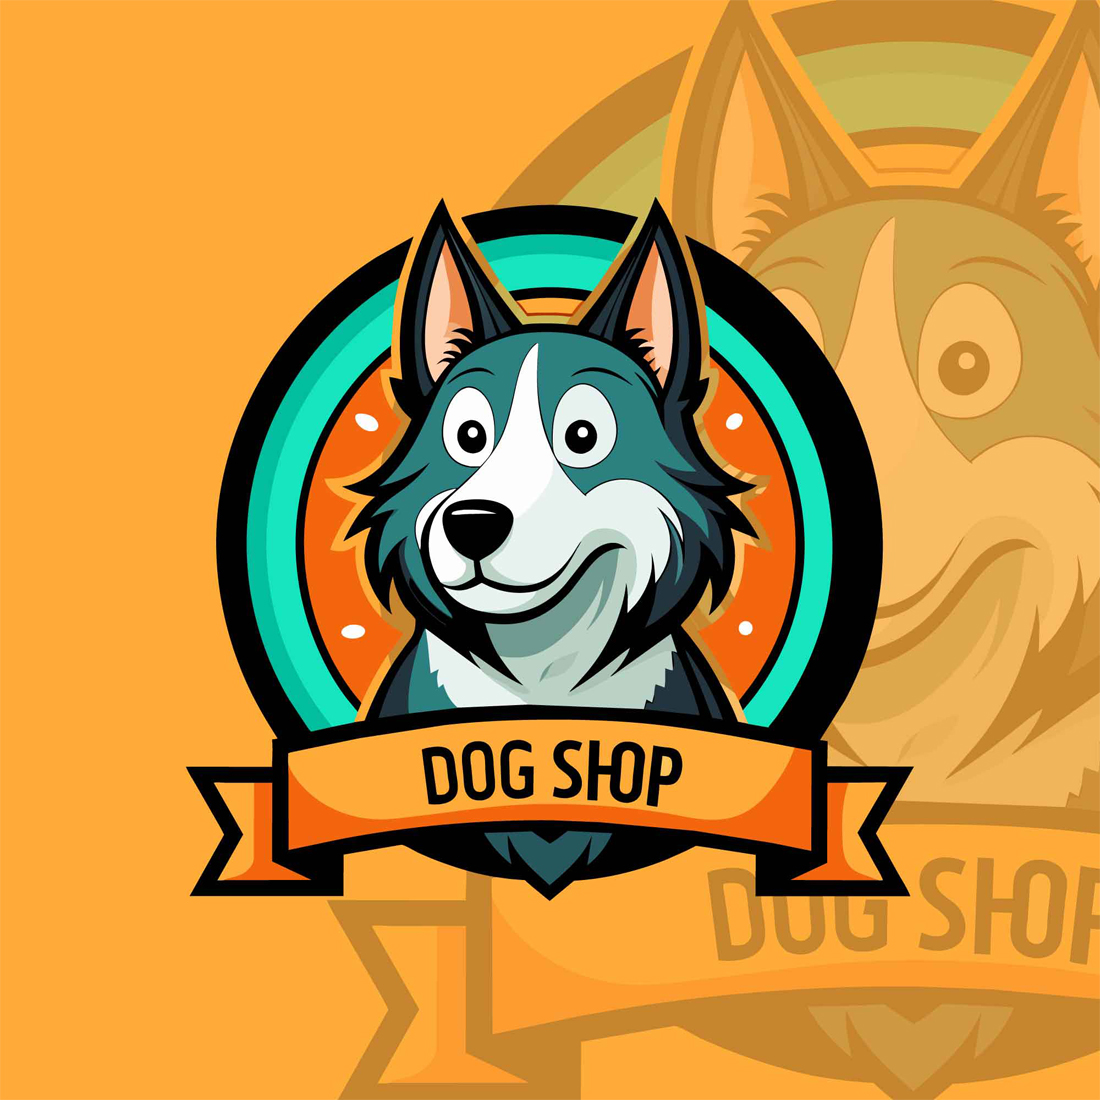 Mascot Dog Shop Logo preview image.